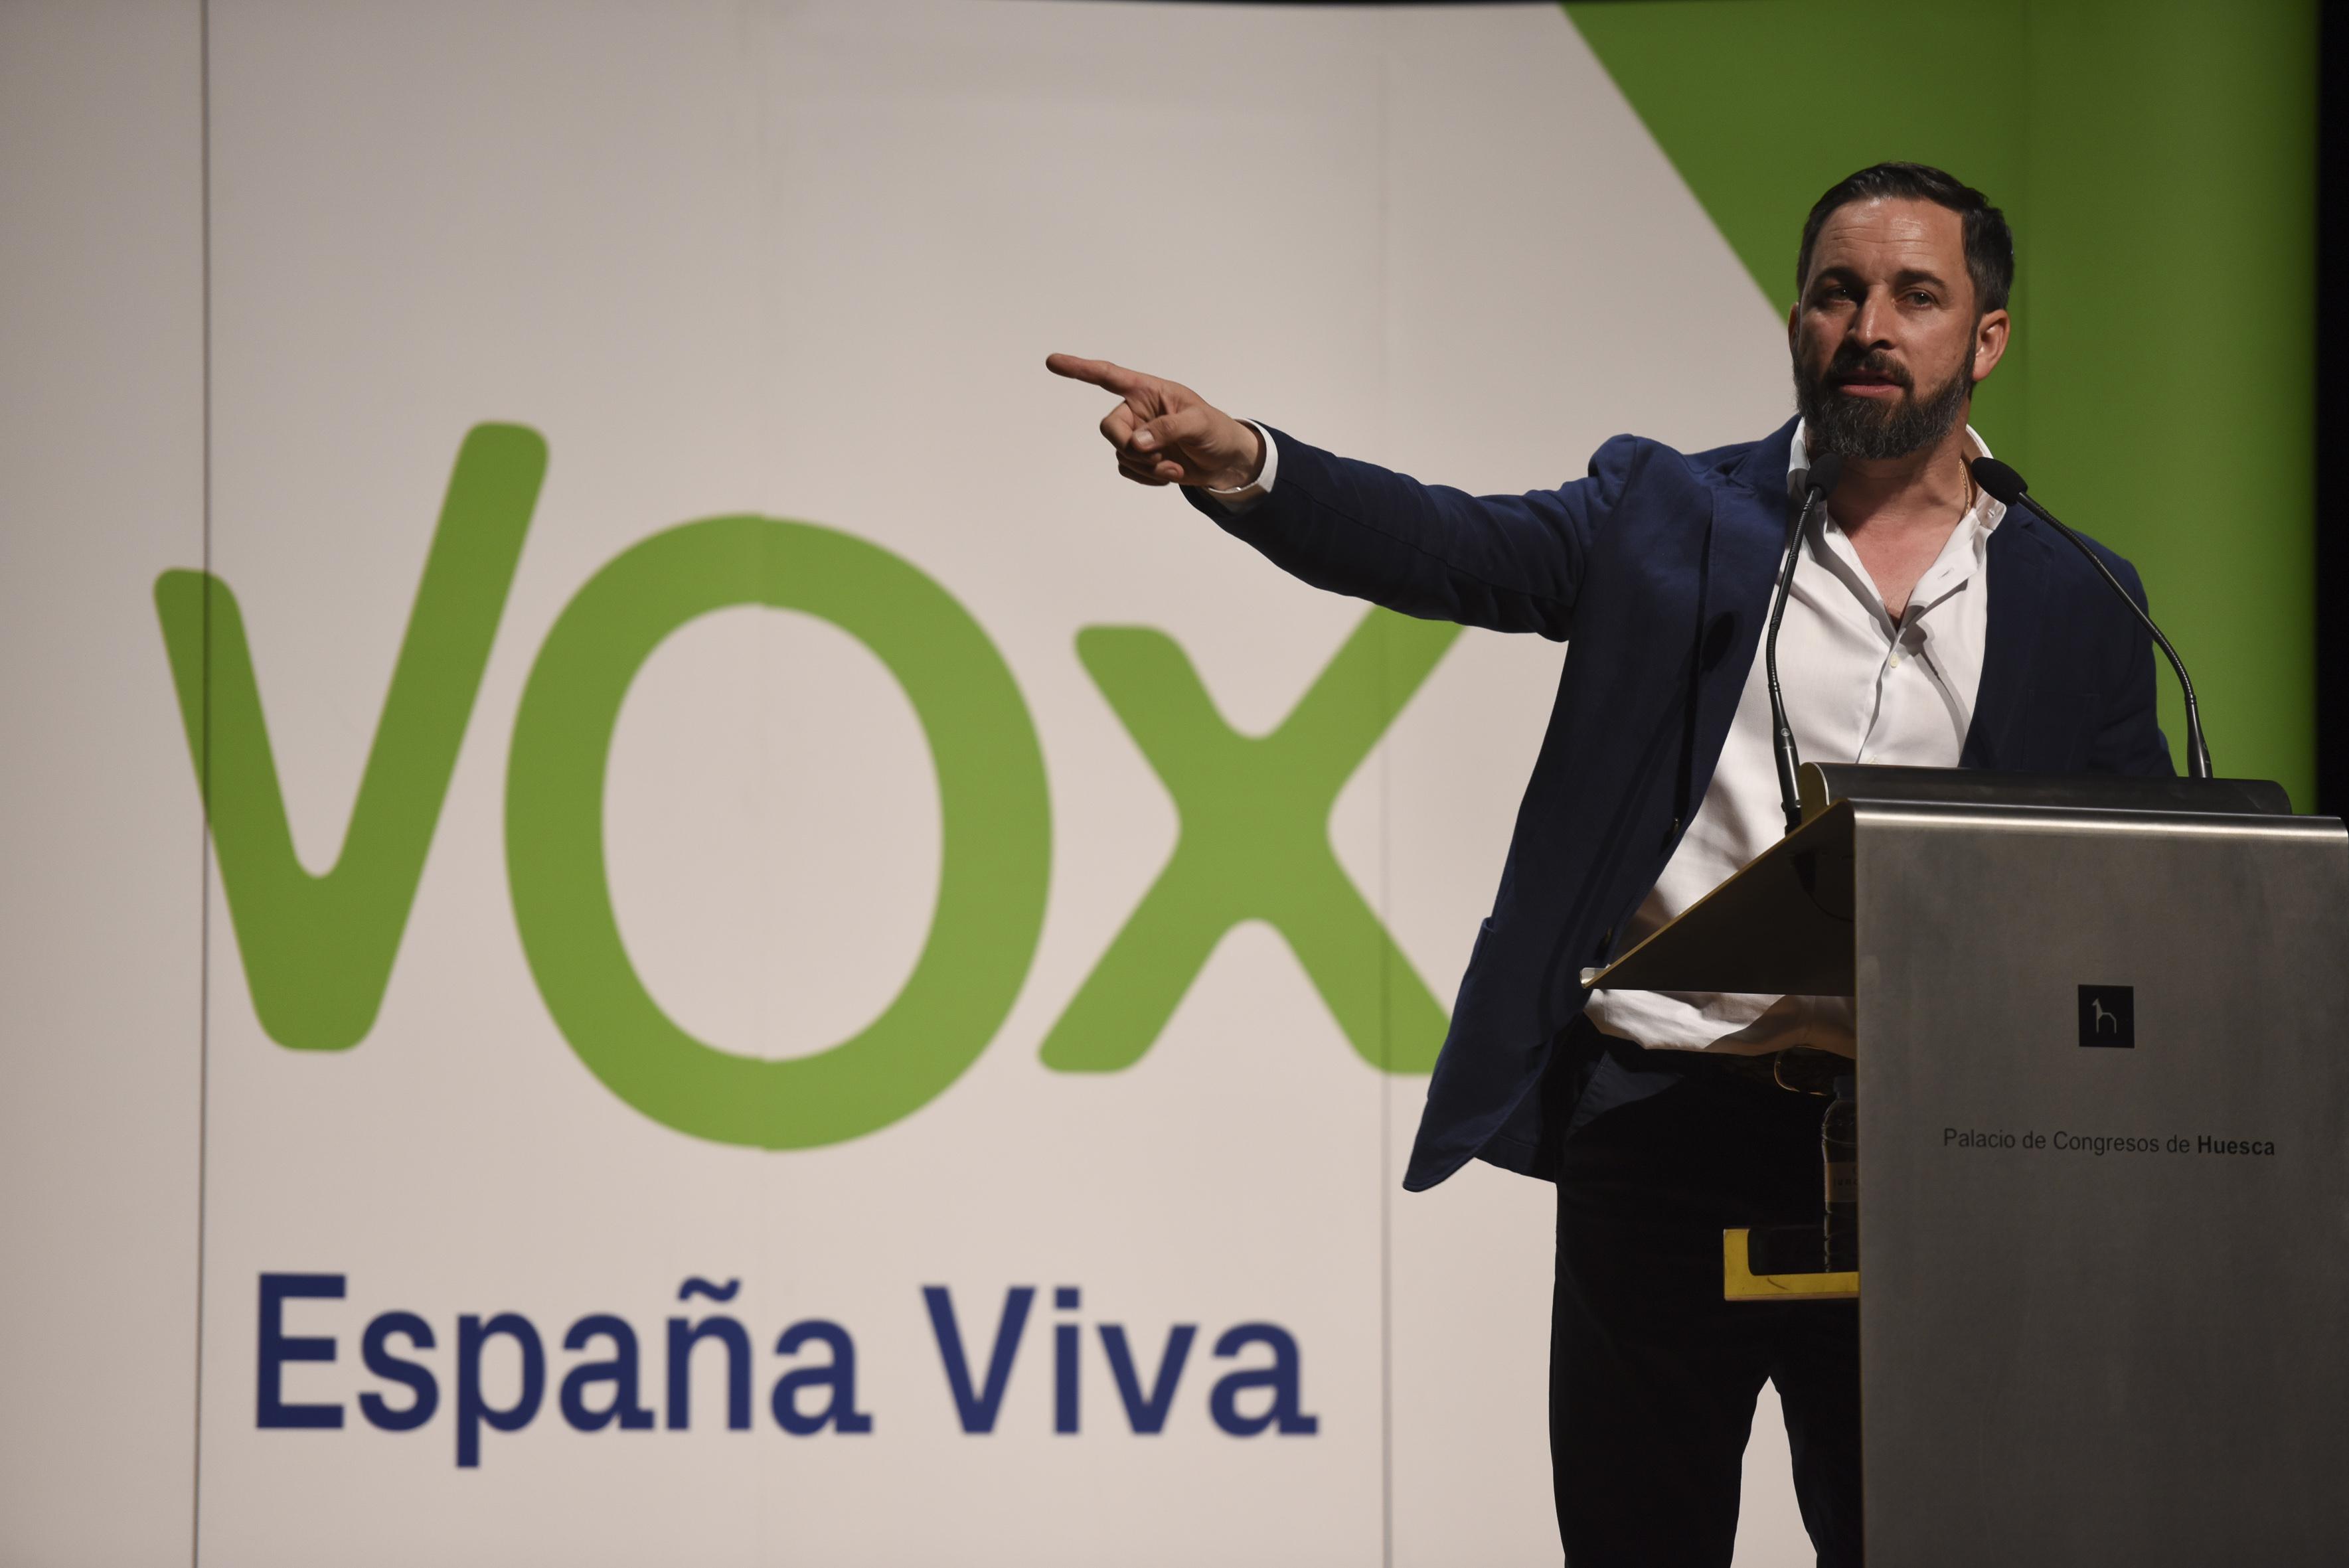 El presidente de Vox Santiago Abascal participa en un acto público en Huesca. Europa Press. 